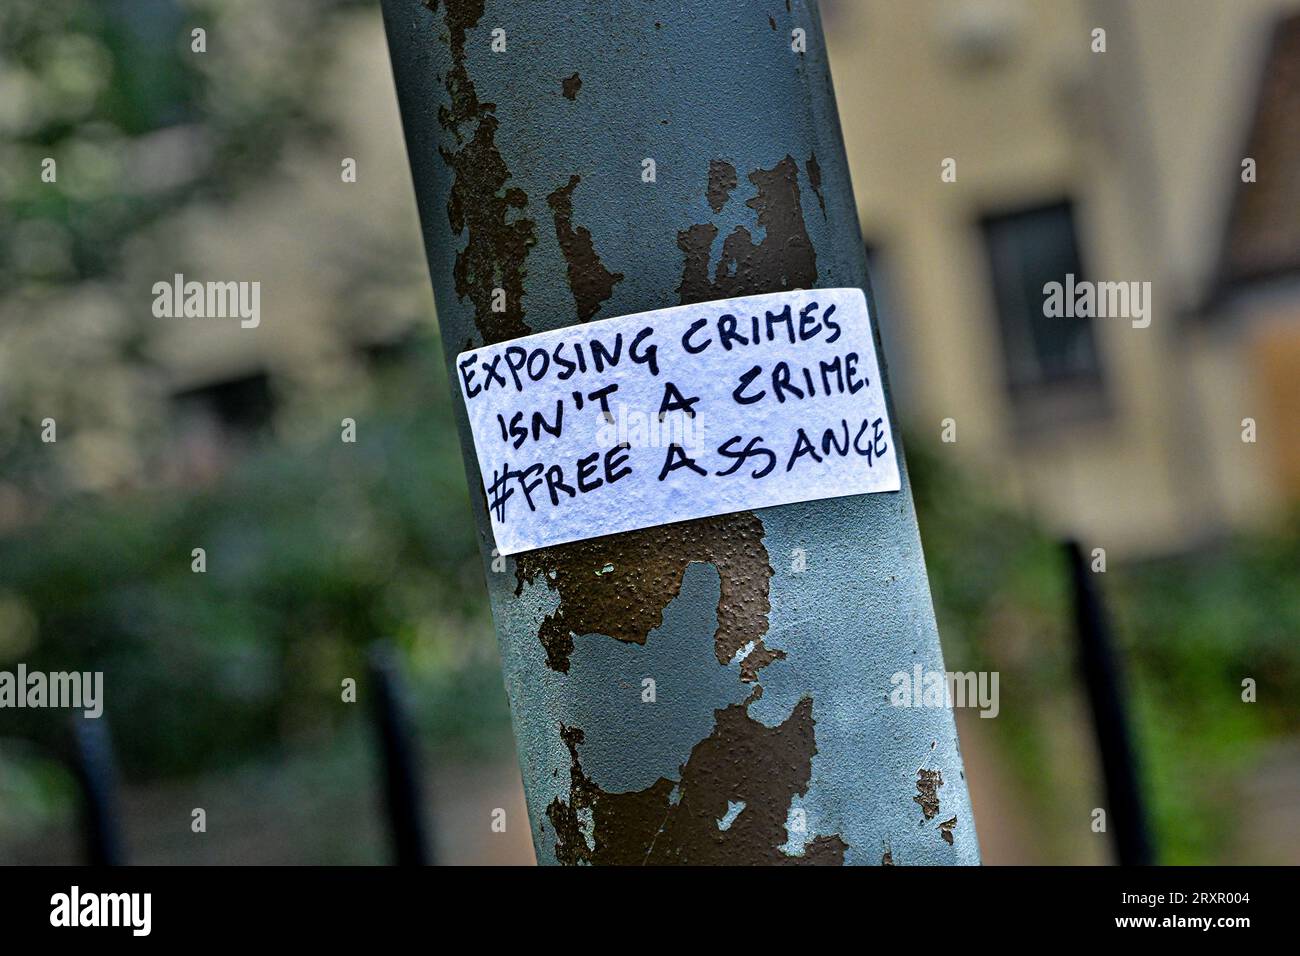 Political Statement On A Lamp Post In Stockbridge Edinburgh United Kingdom In Support Of WikiLeaks Owner Julian Assange Stock Photo